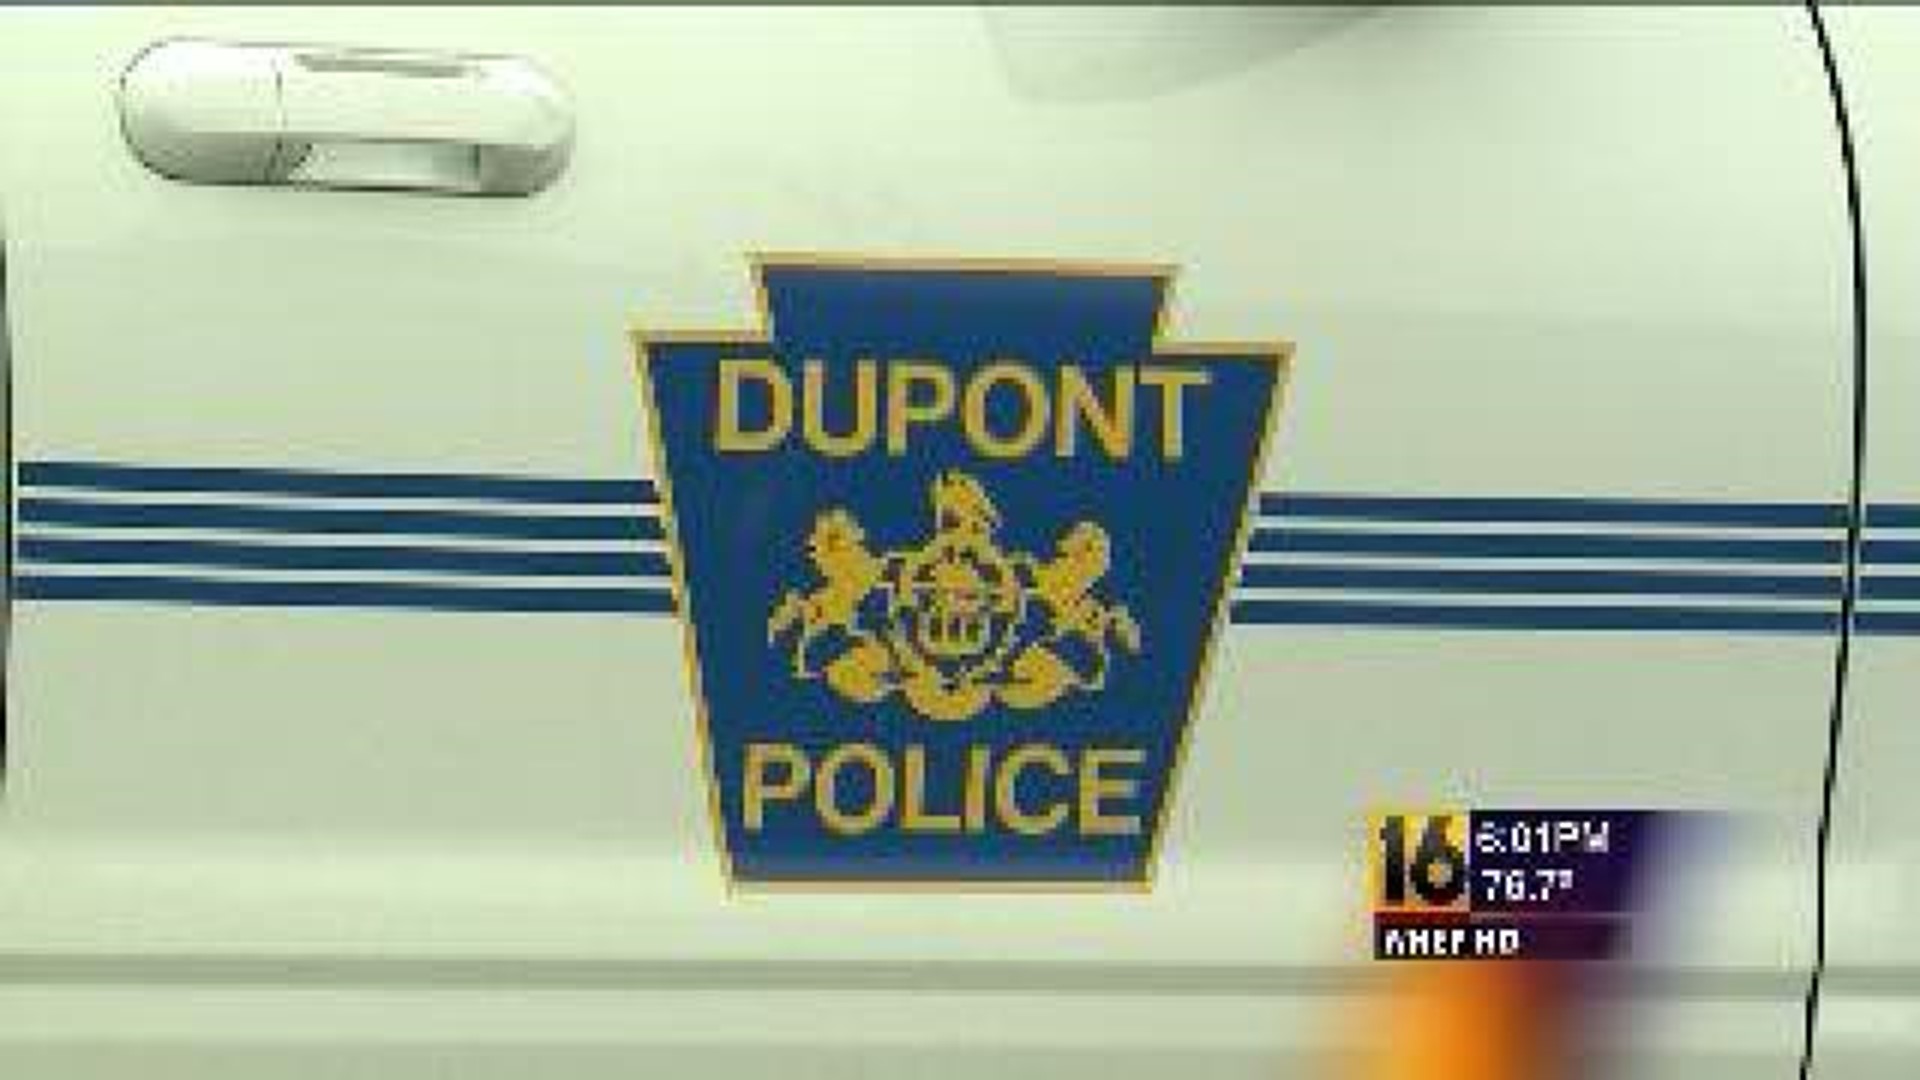 FBI: Dupont Police Officer Bought Drugs from Robert Evans